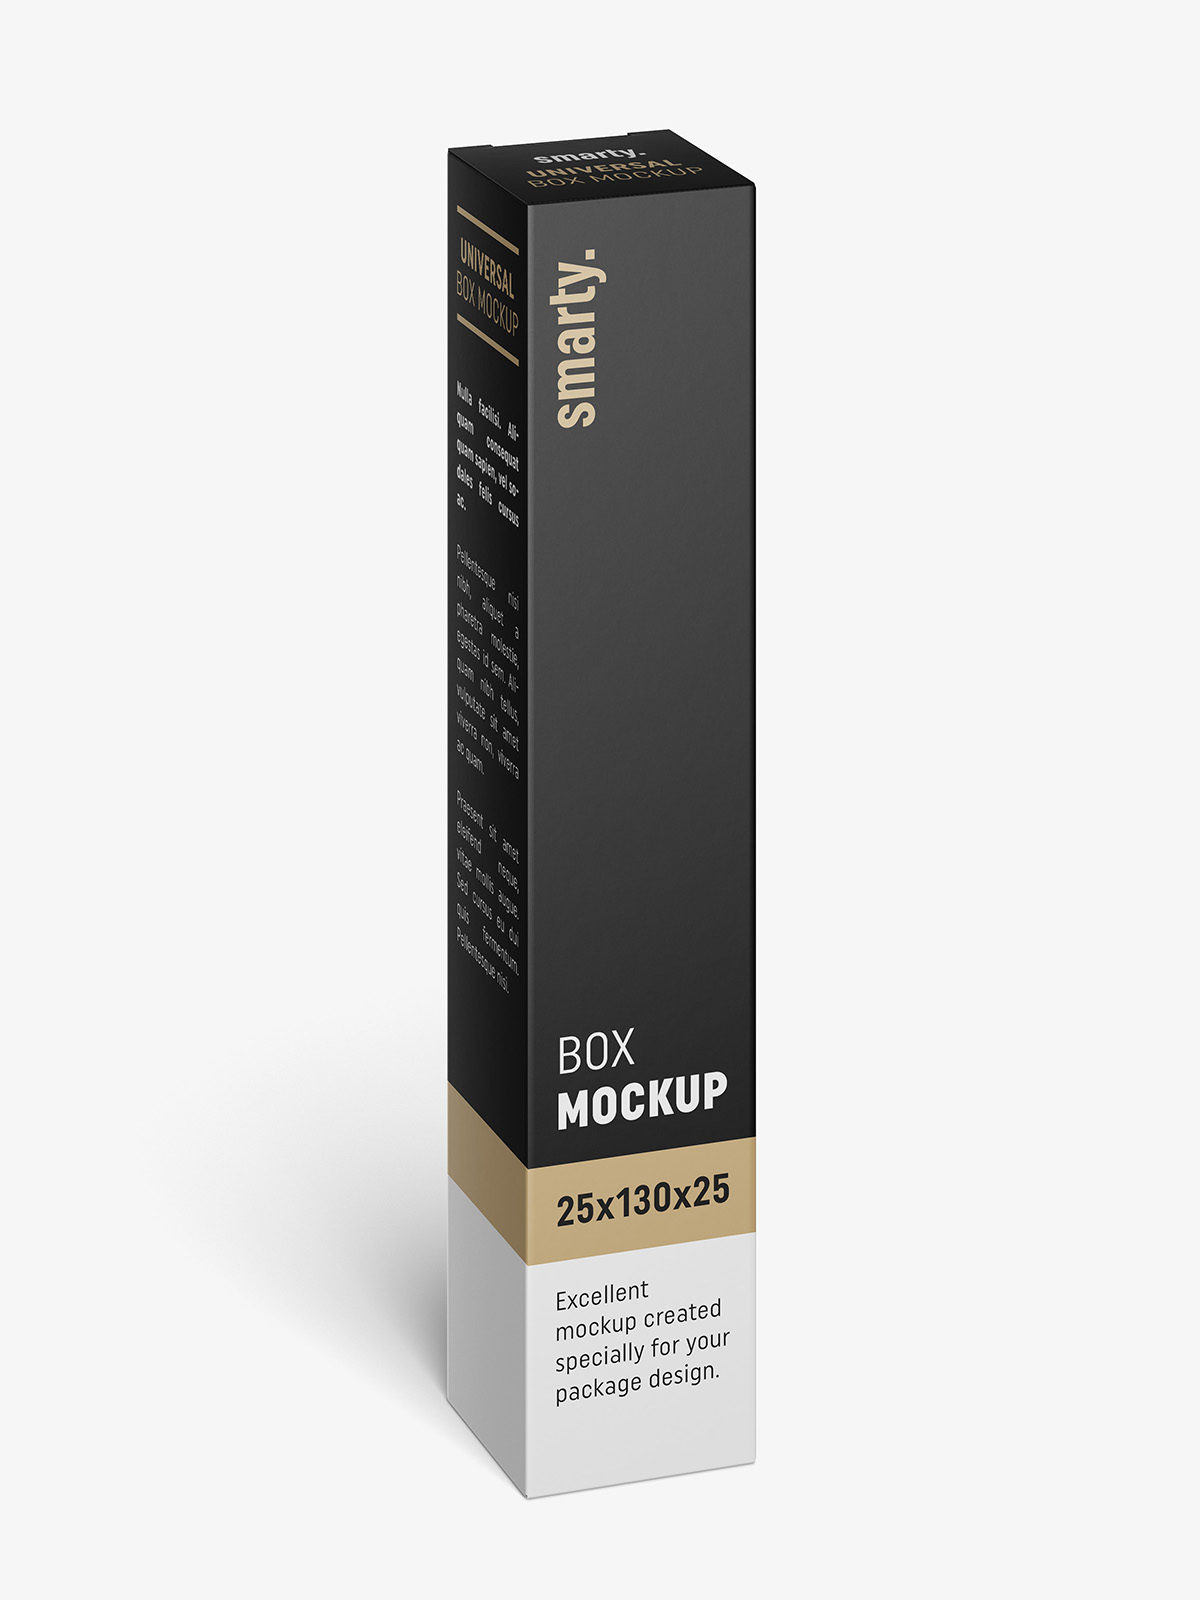 Download Box mockup / 25x130x25 - Smarty Mockups